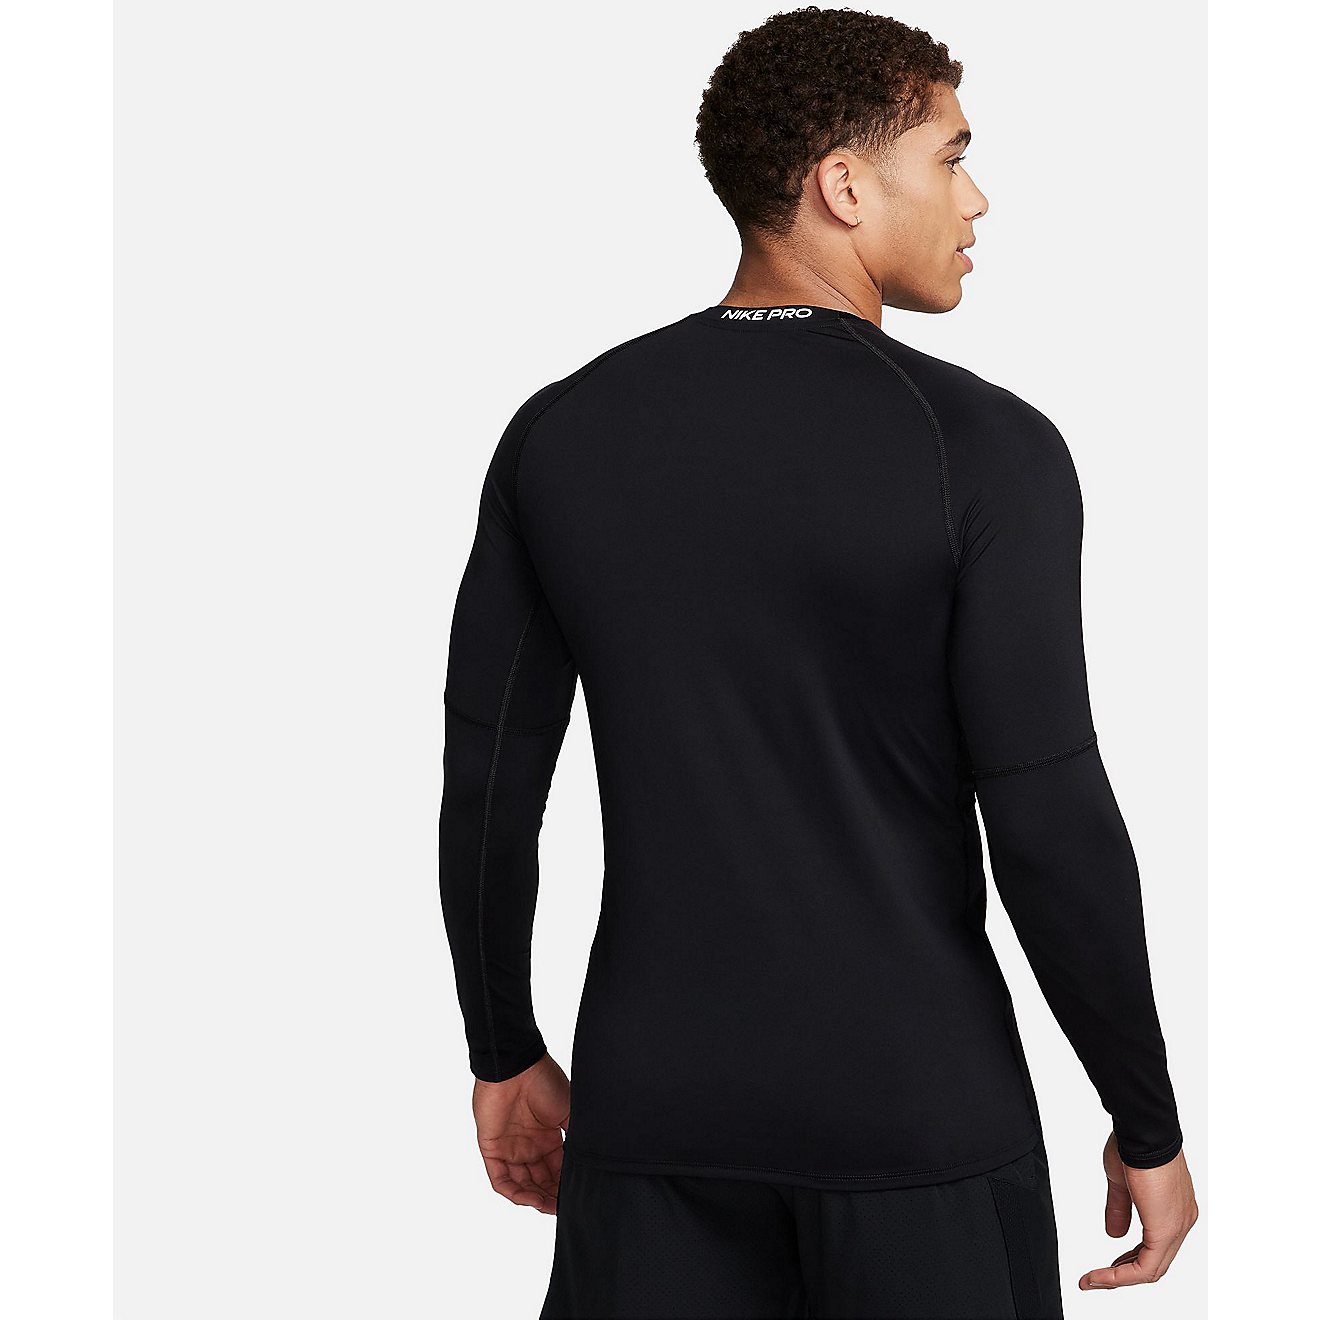 Nike Men's Slim Long Sleeve T-shirt | Free Shipping at Academy